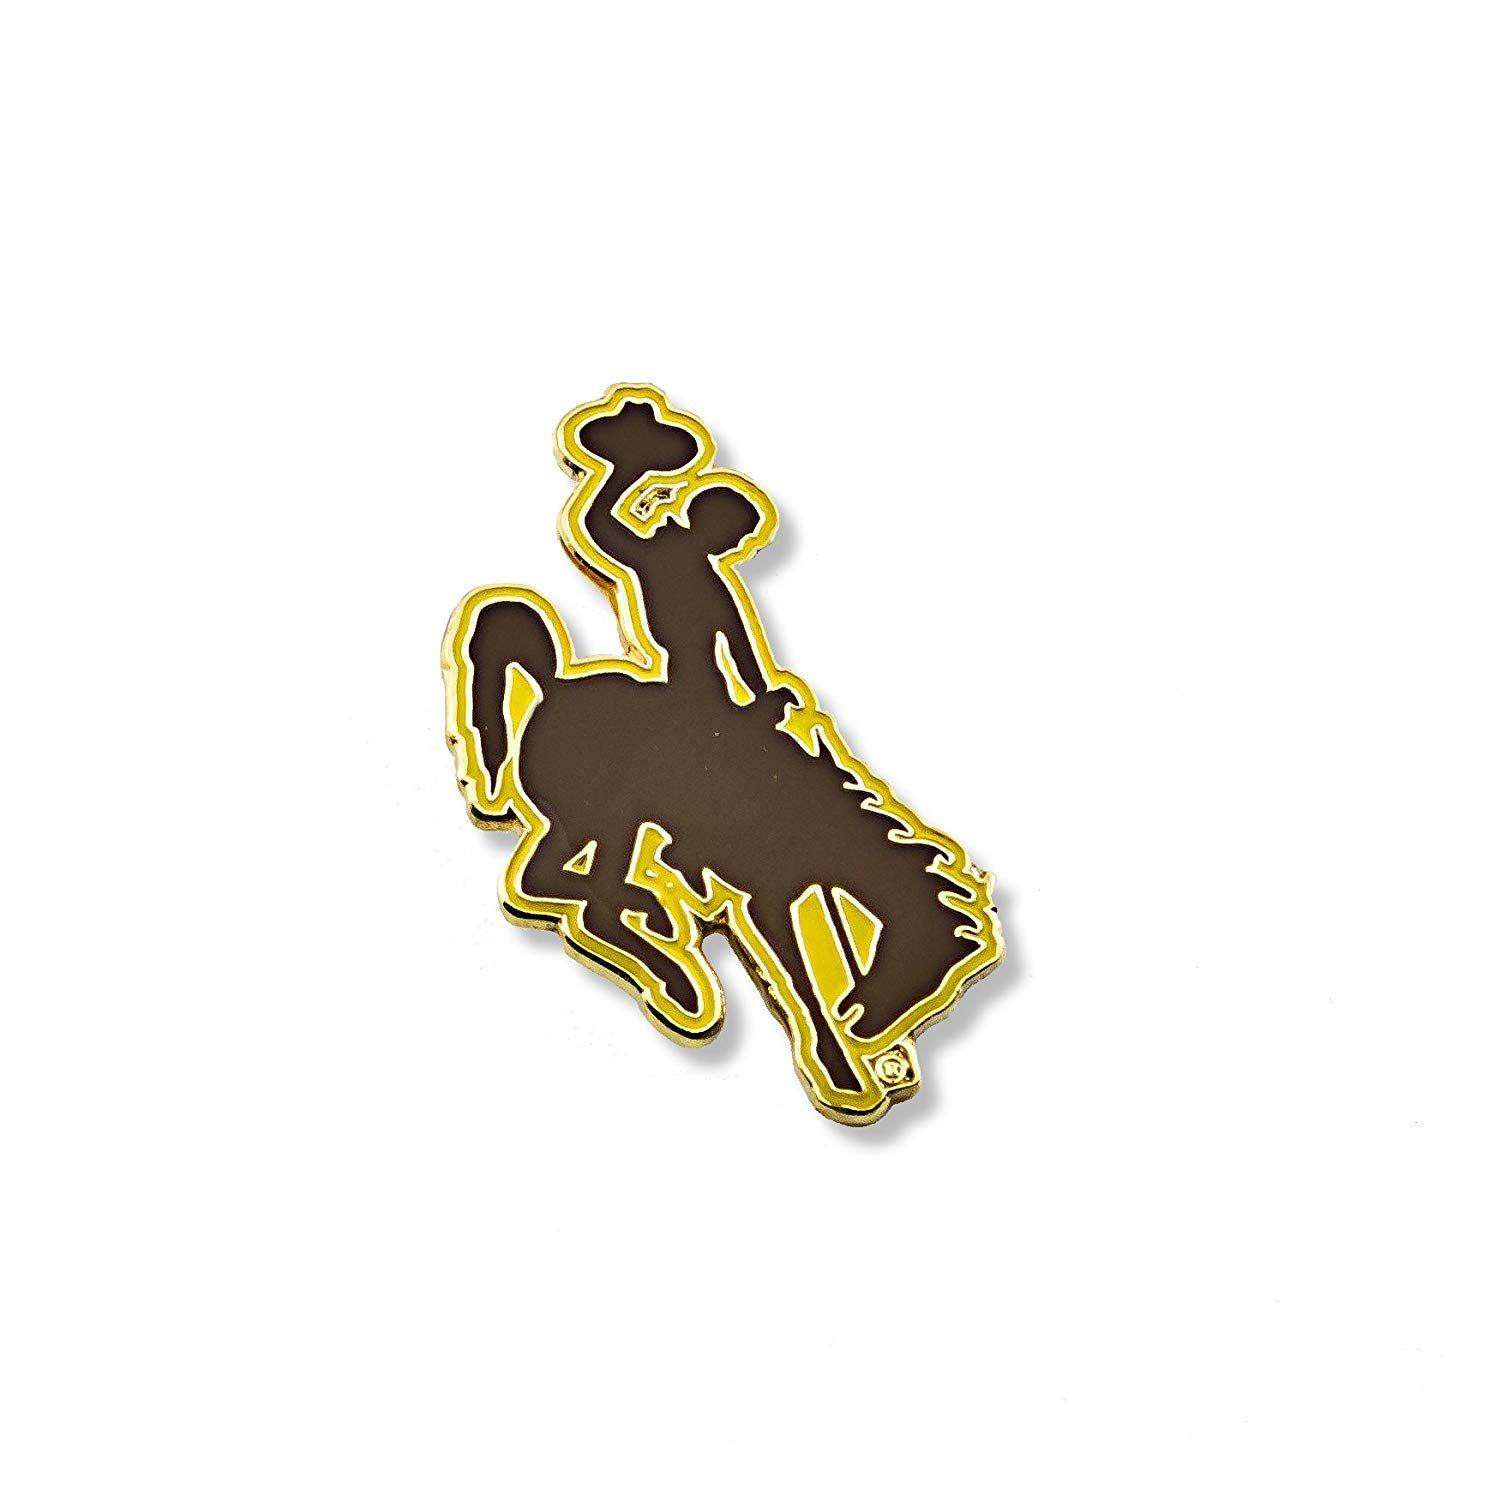 Wyoming Logo - Amazon.com : NCAA Wyoming Cowboys Logo Pin : Sports Related Pins ...